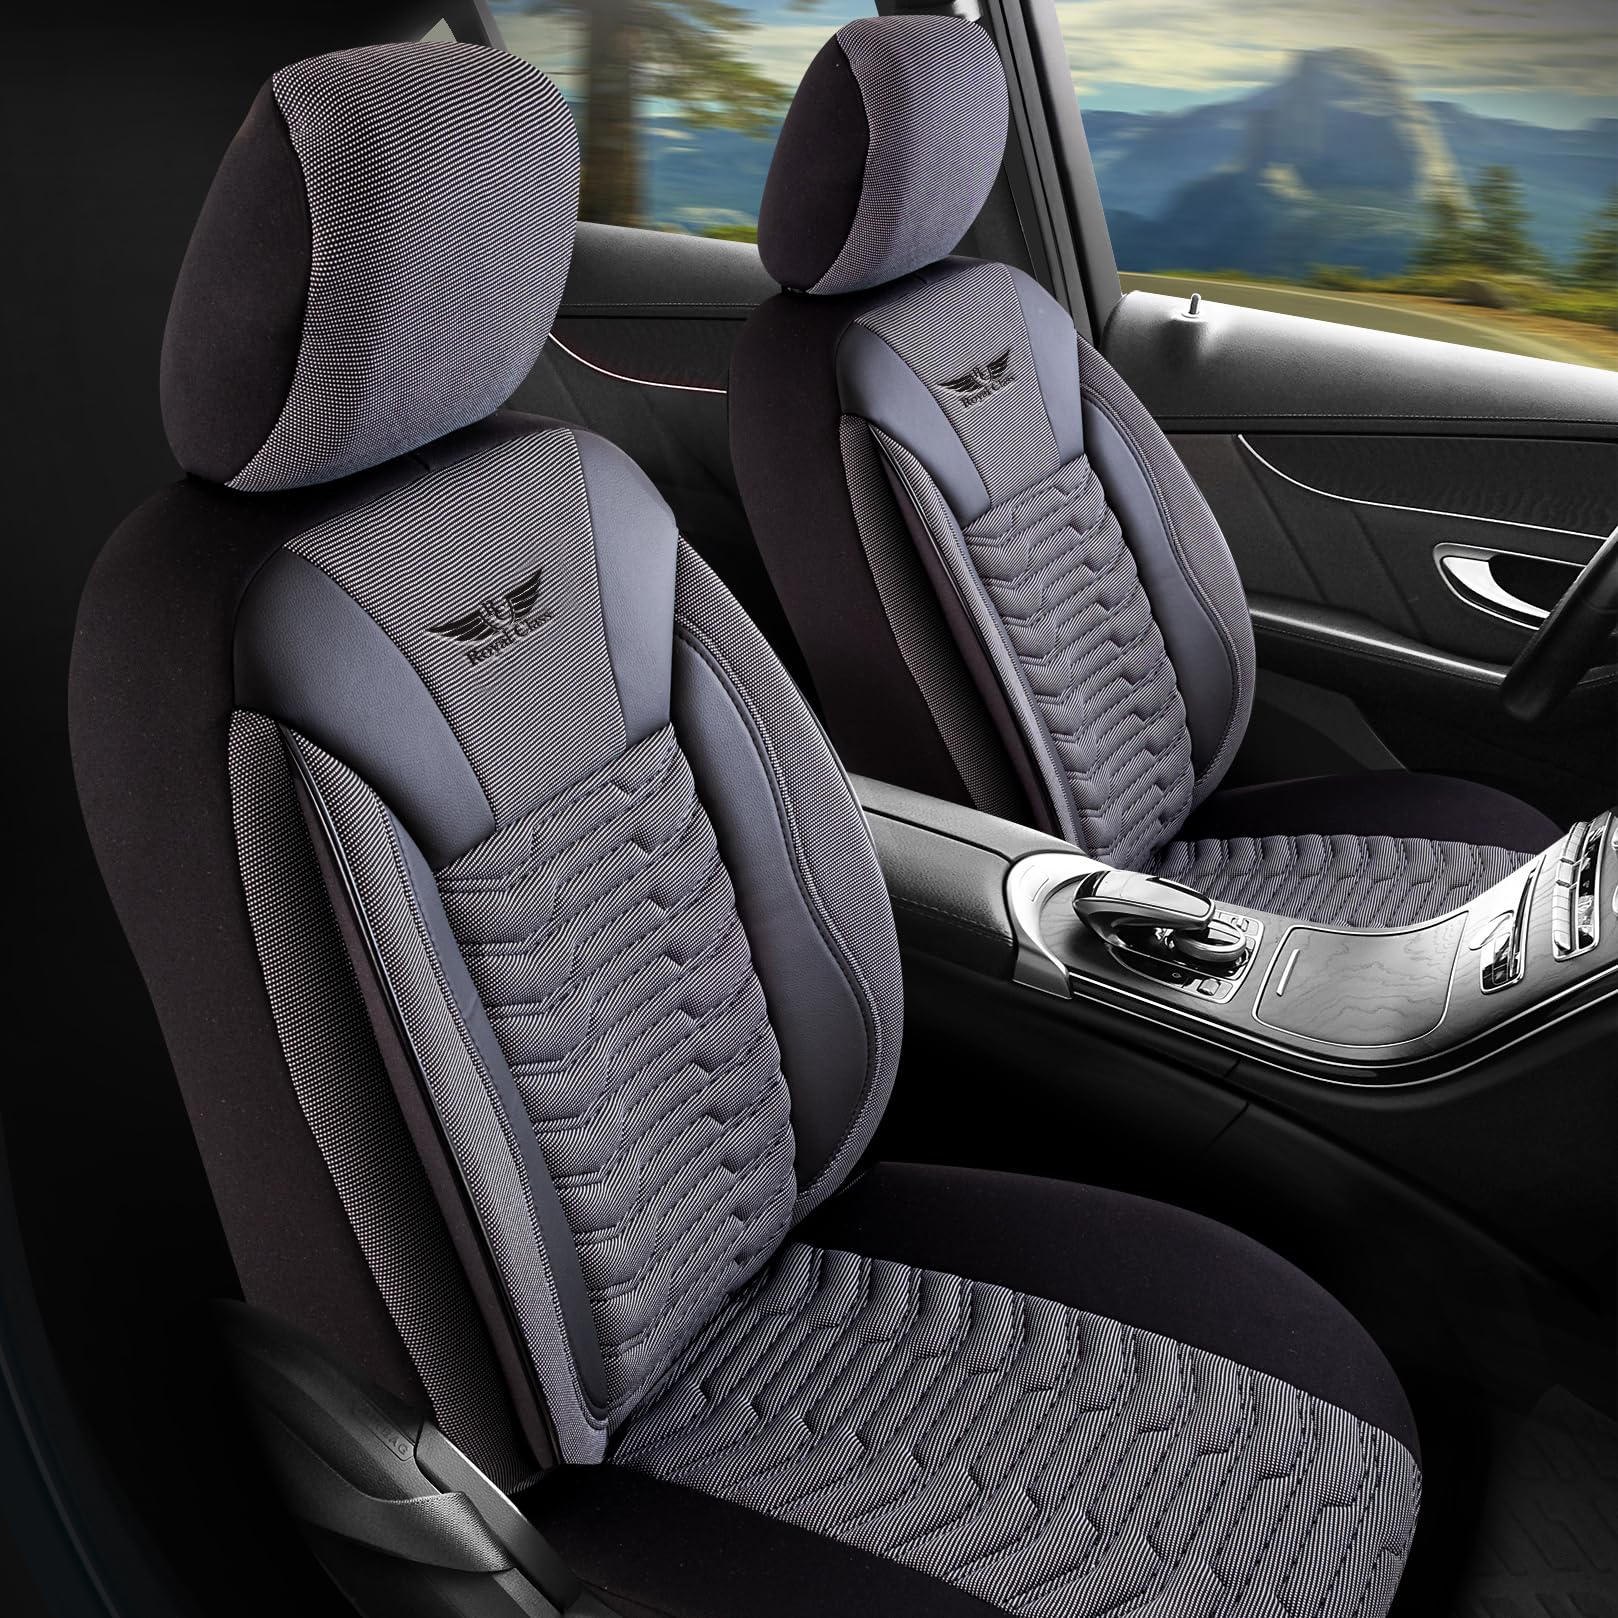 Royal Class Auto Sitzbezüge kompatibel für Volvo XC40 in Dark Grau Komplett Fahrer und Beifahrer mit Rücksitzbank, Autositzbezug Schonbezug Sitzbezug Komplettset 5-Sitze Kunstleder von RC Royal Class